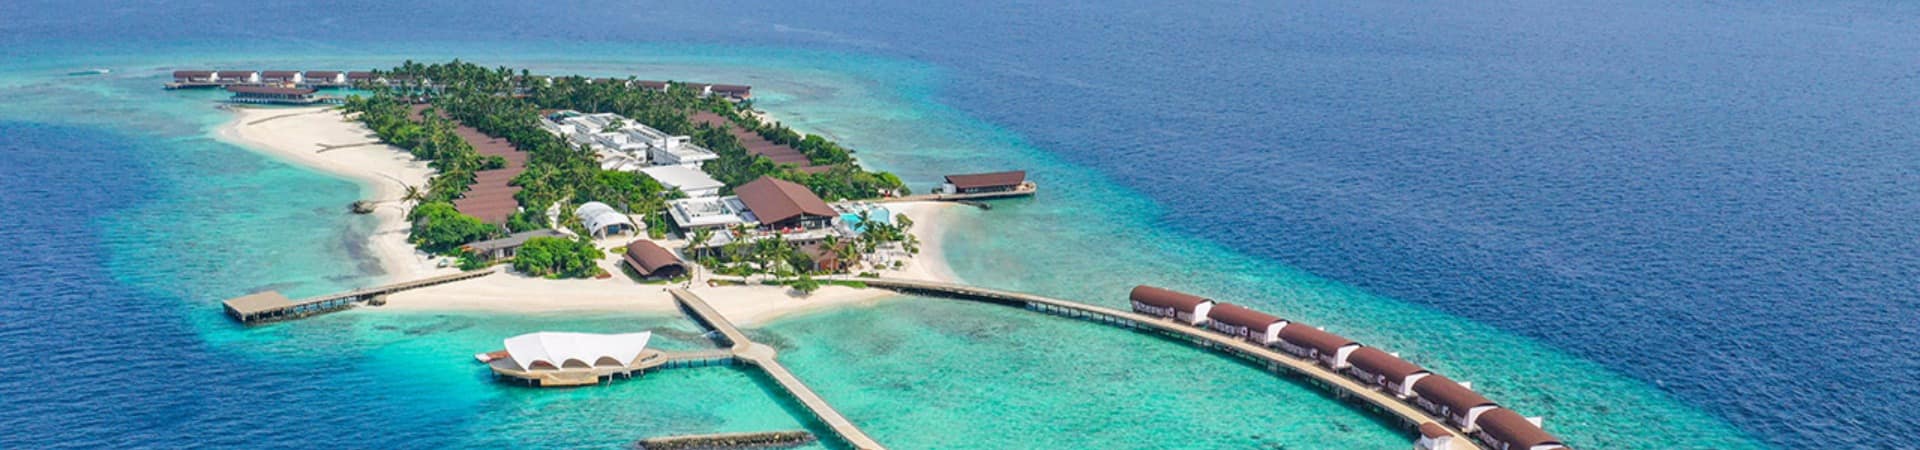 The westin maldives vista aerea